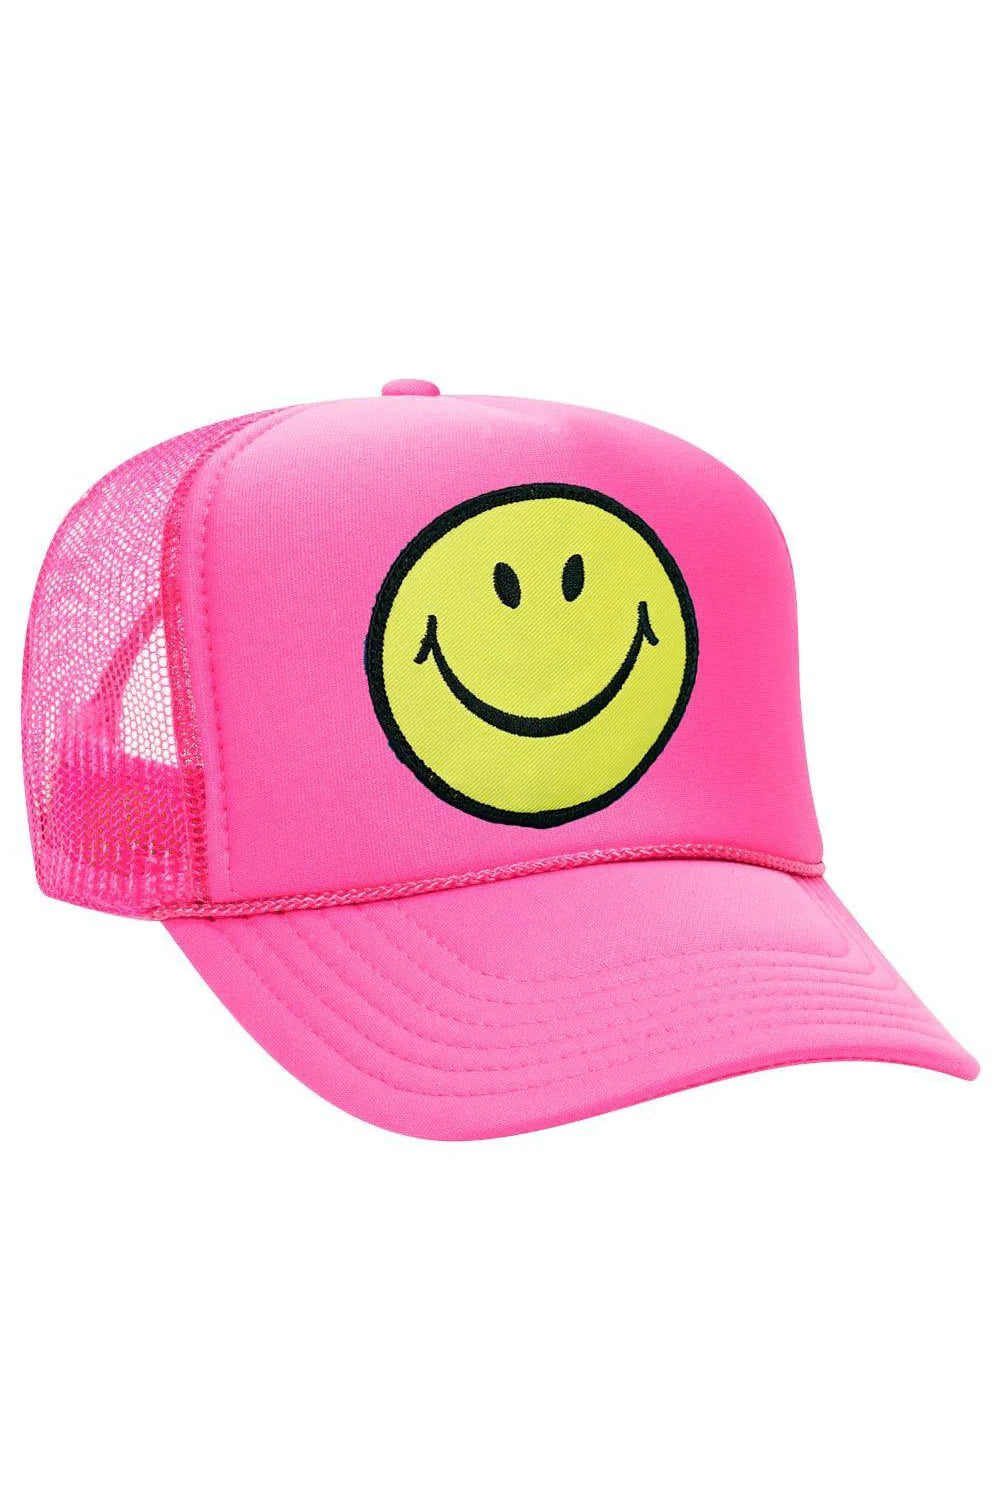 Aviator Nation Vintage Smiley Trucker Hat in Neon Pink